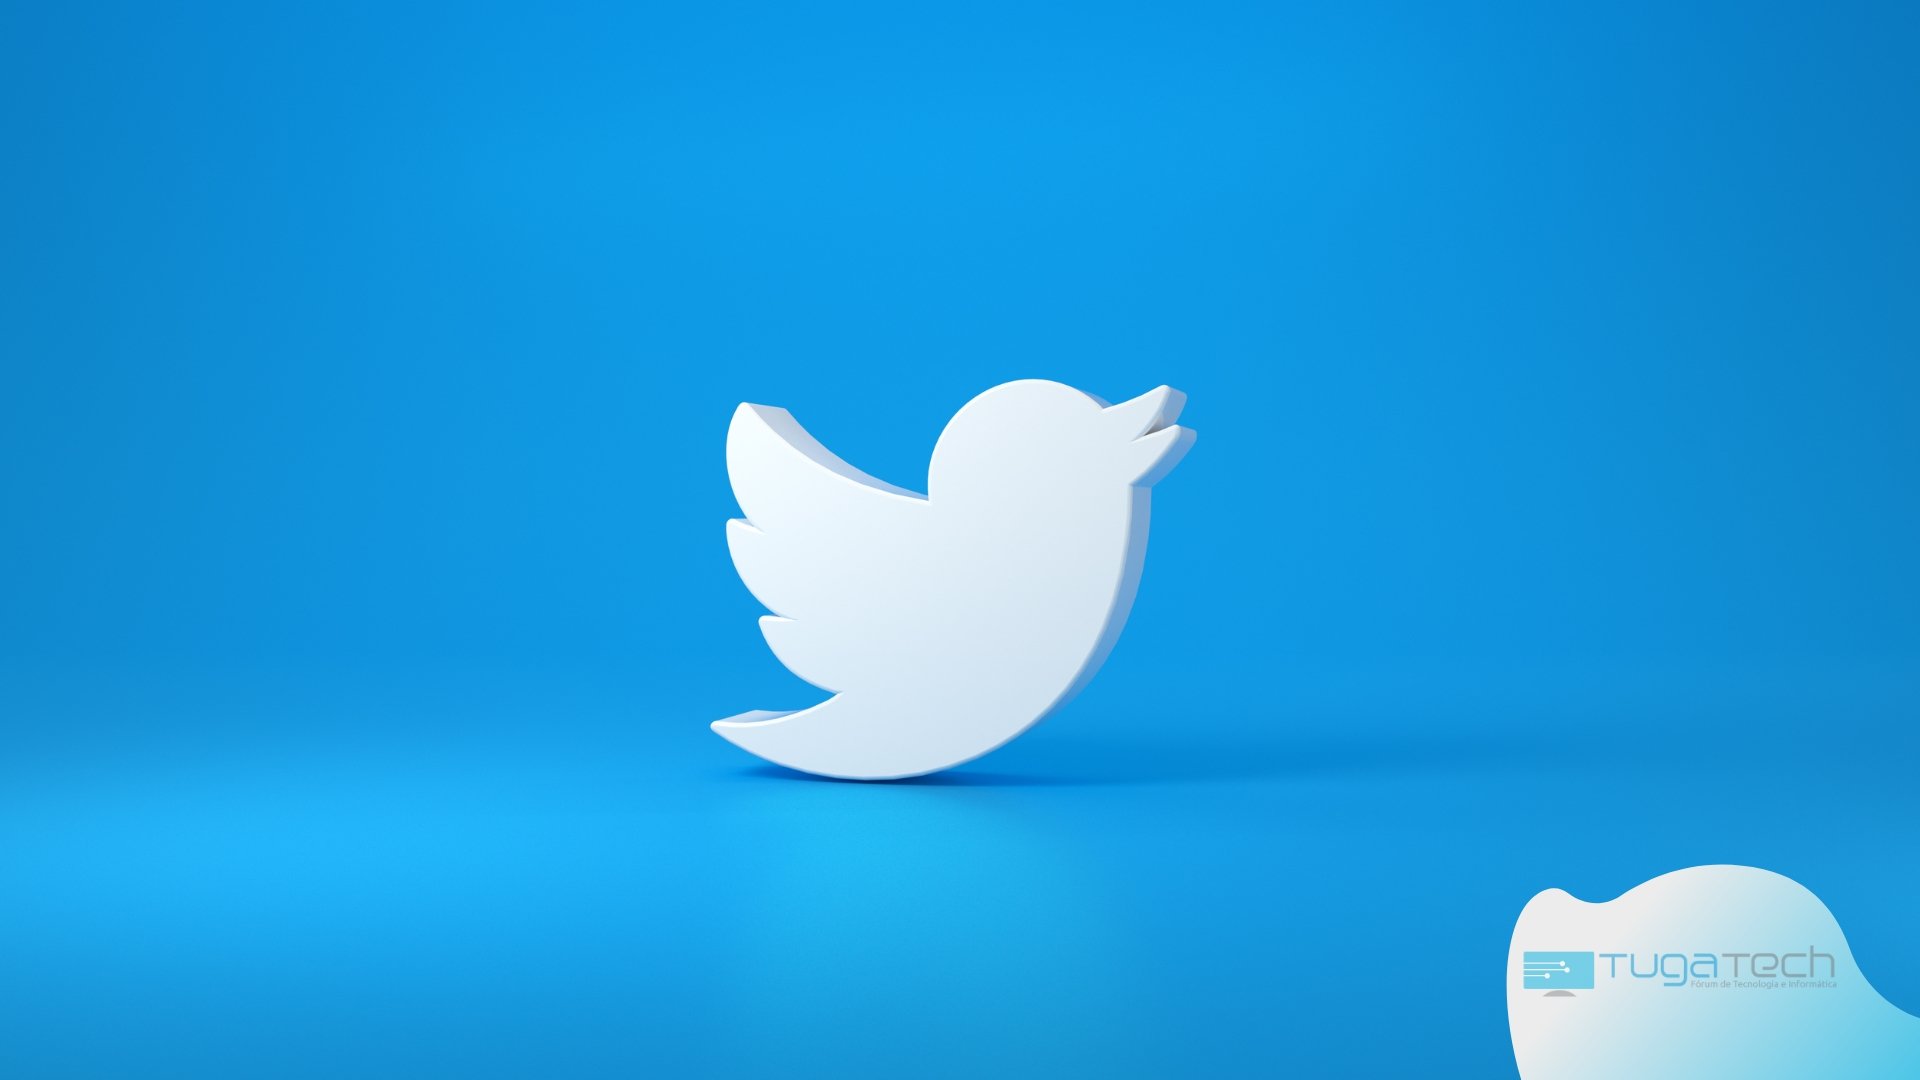 Logo do Twitter sobre fundo azul